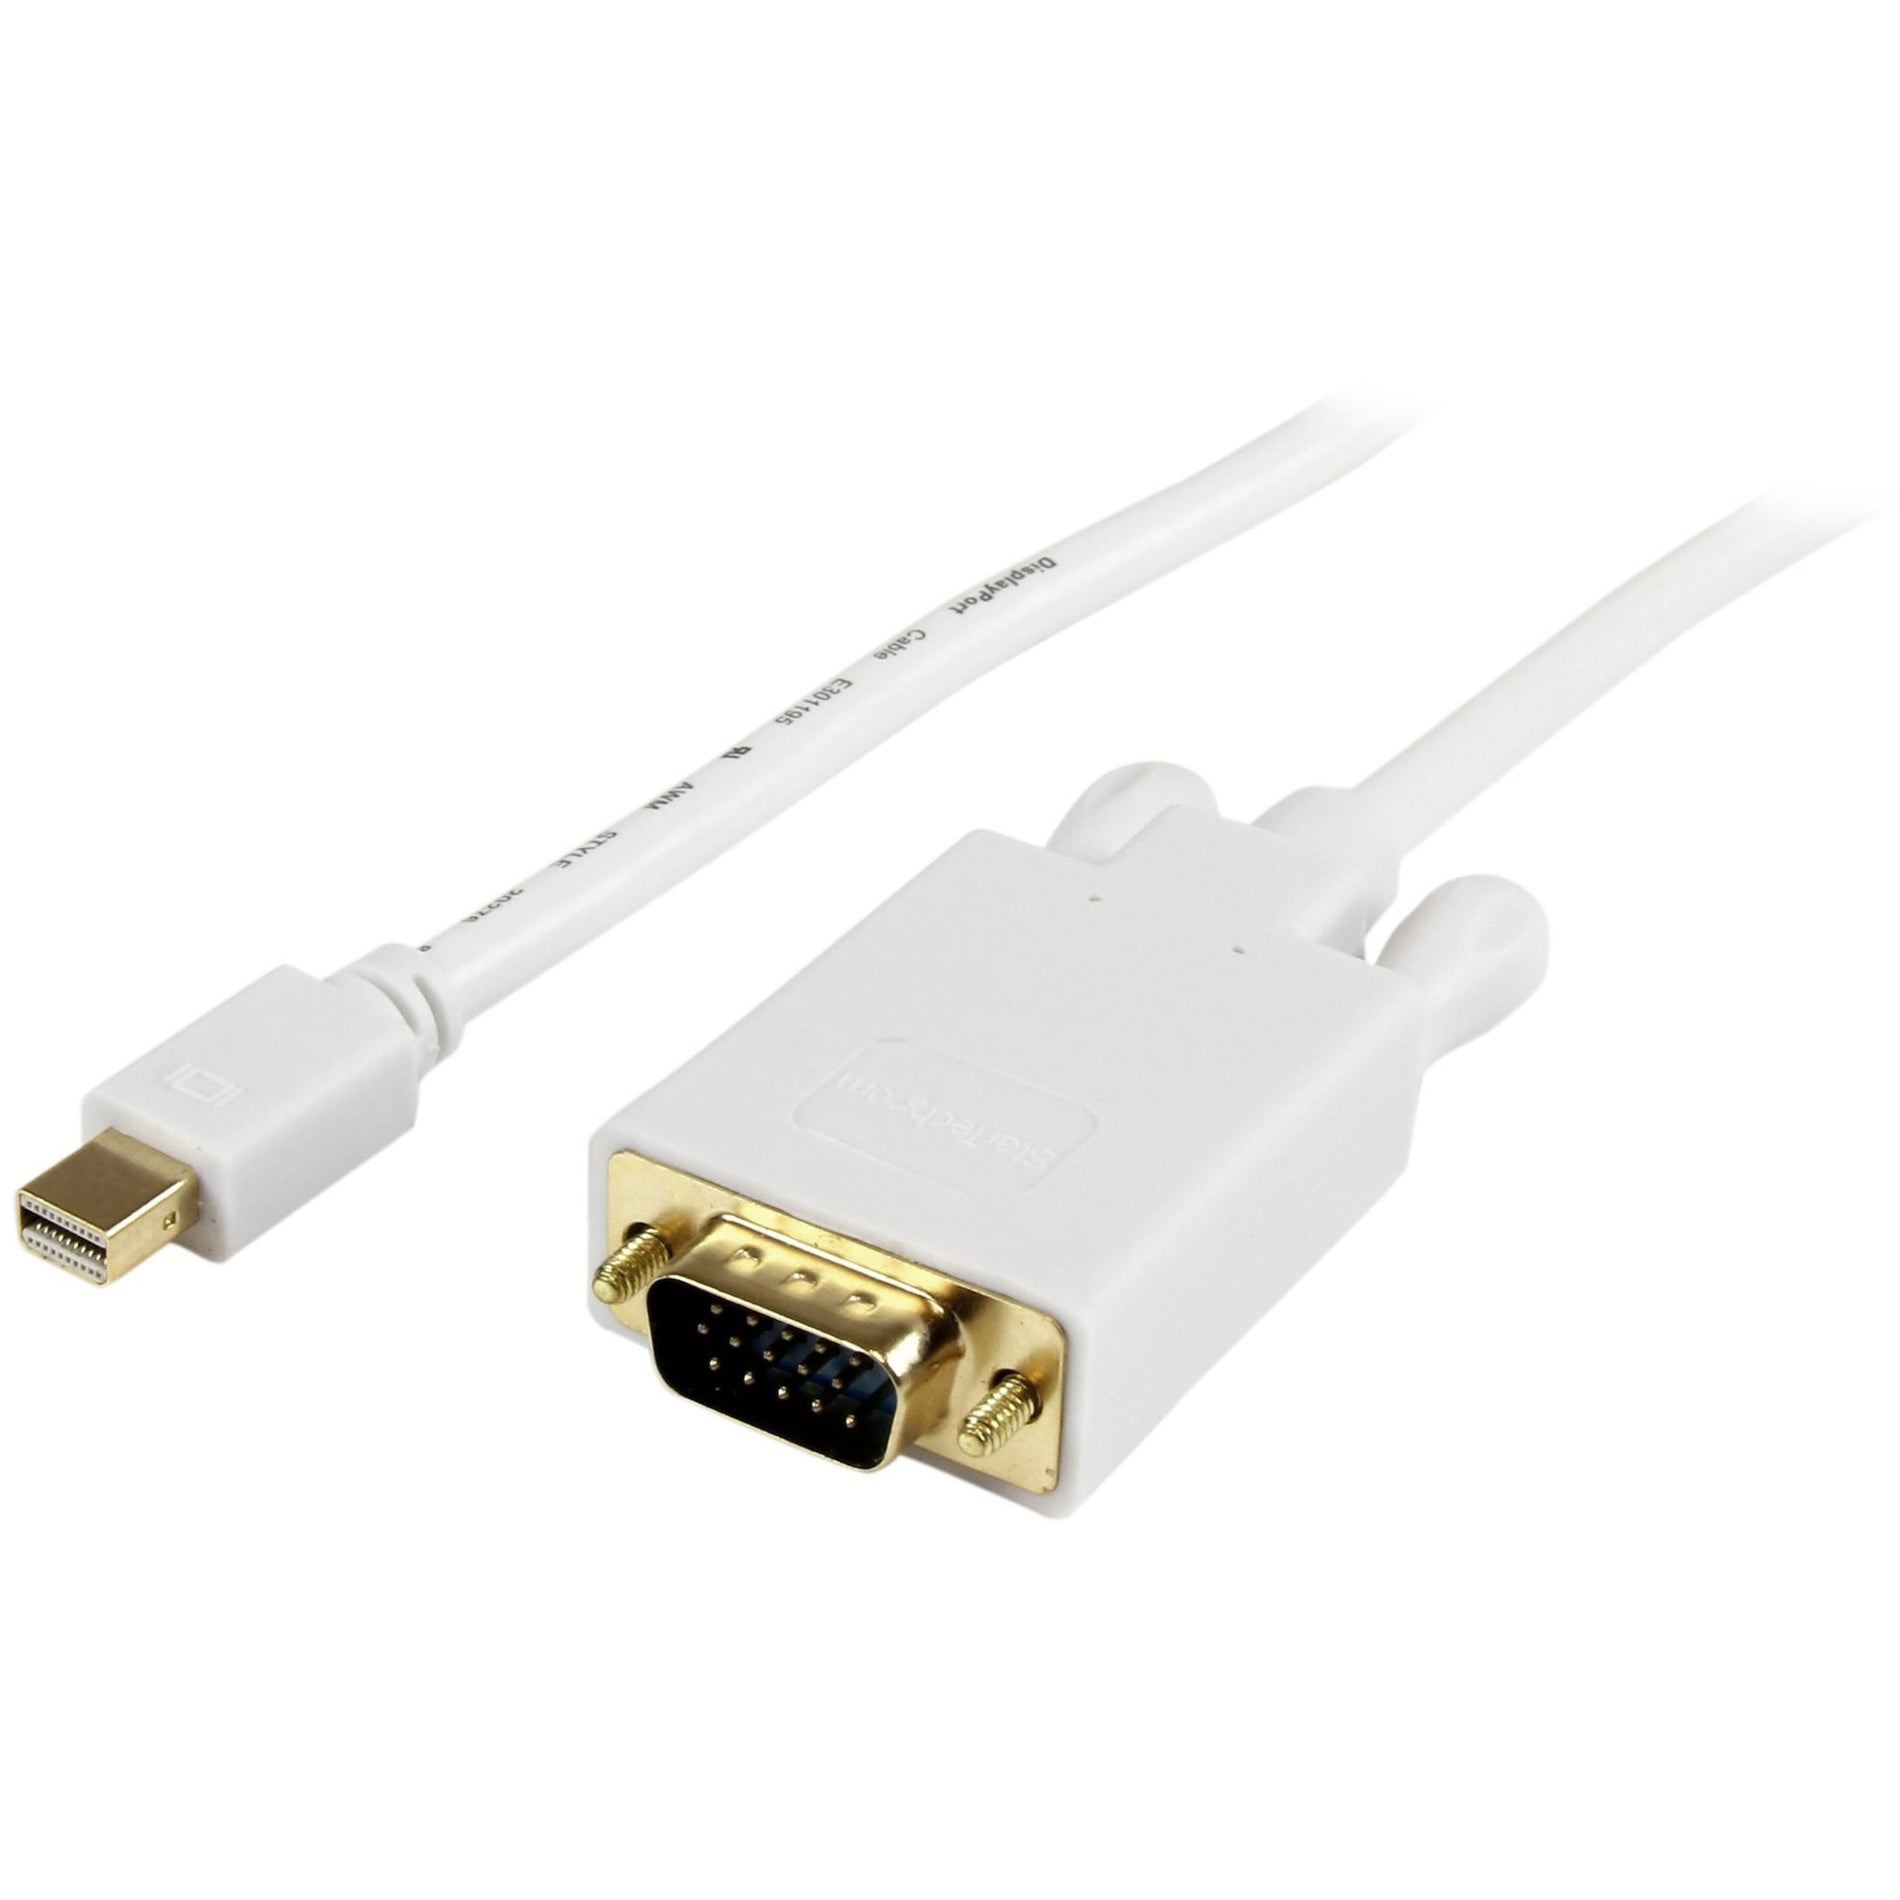 StarTech.com MDP2VGAMM3W Mini DisplayPort to VGA Adapter Converter Cable - White, 3 ft, 1920x1200